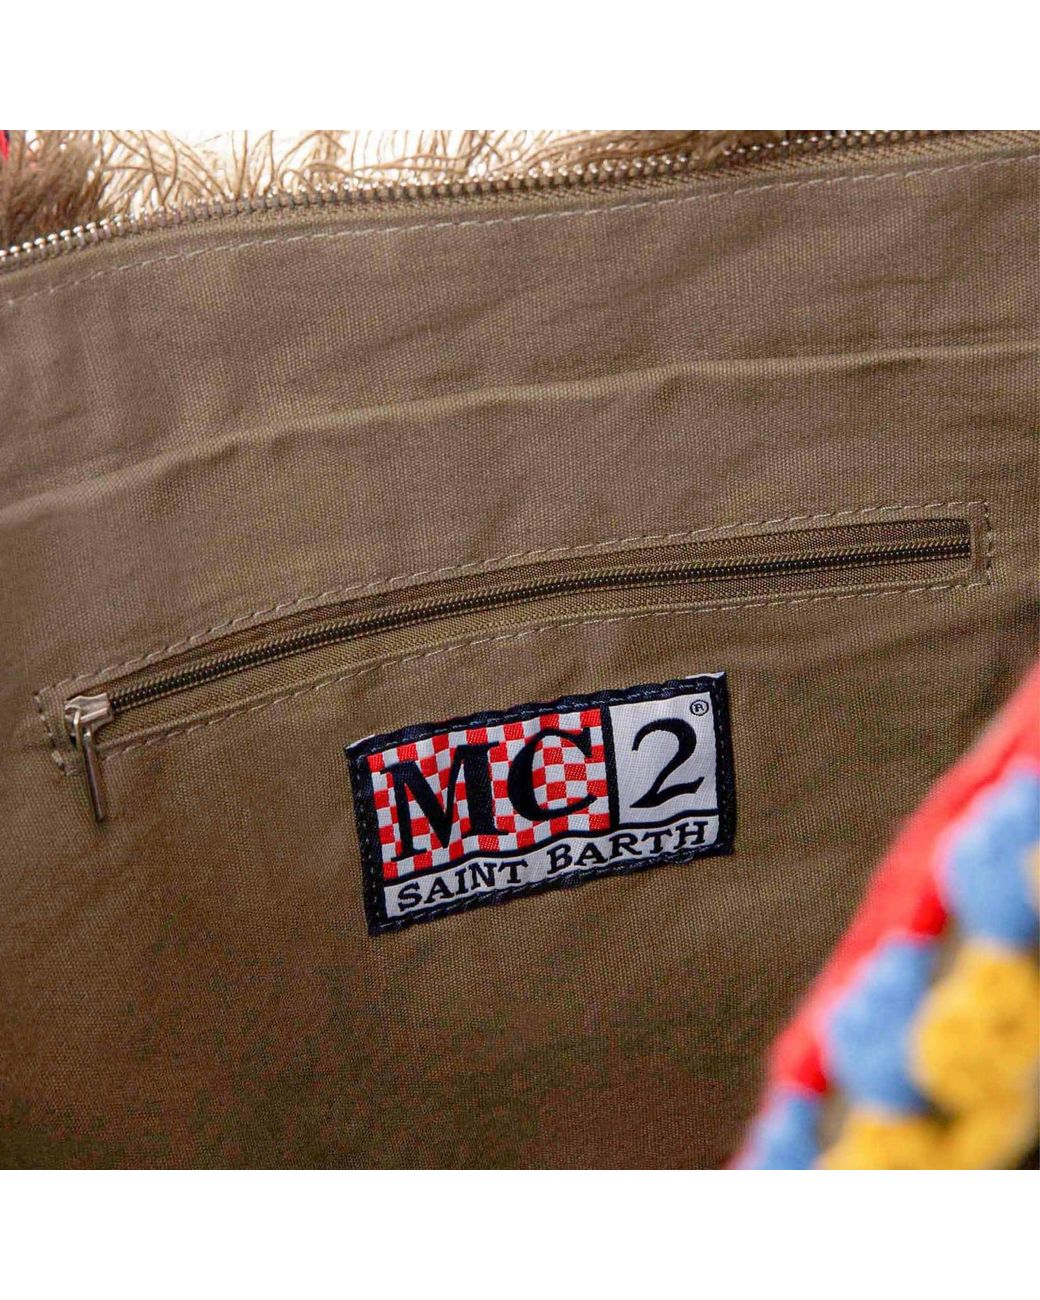 MC2 Saint Barth Vanity Tote Bag in Camouflage — UFO No More